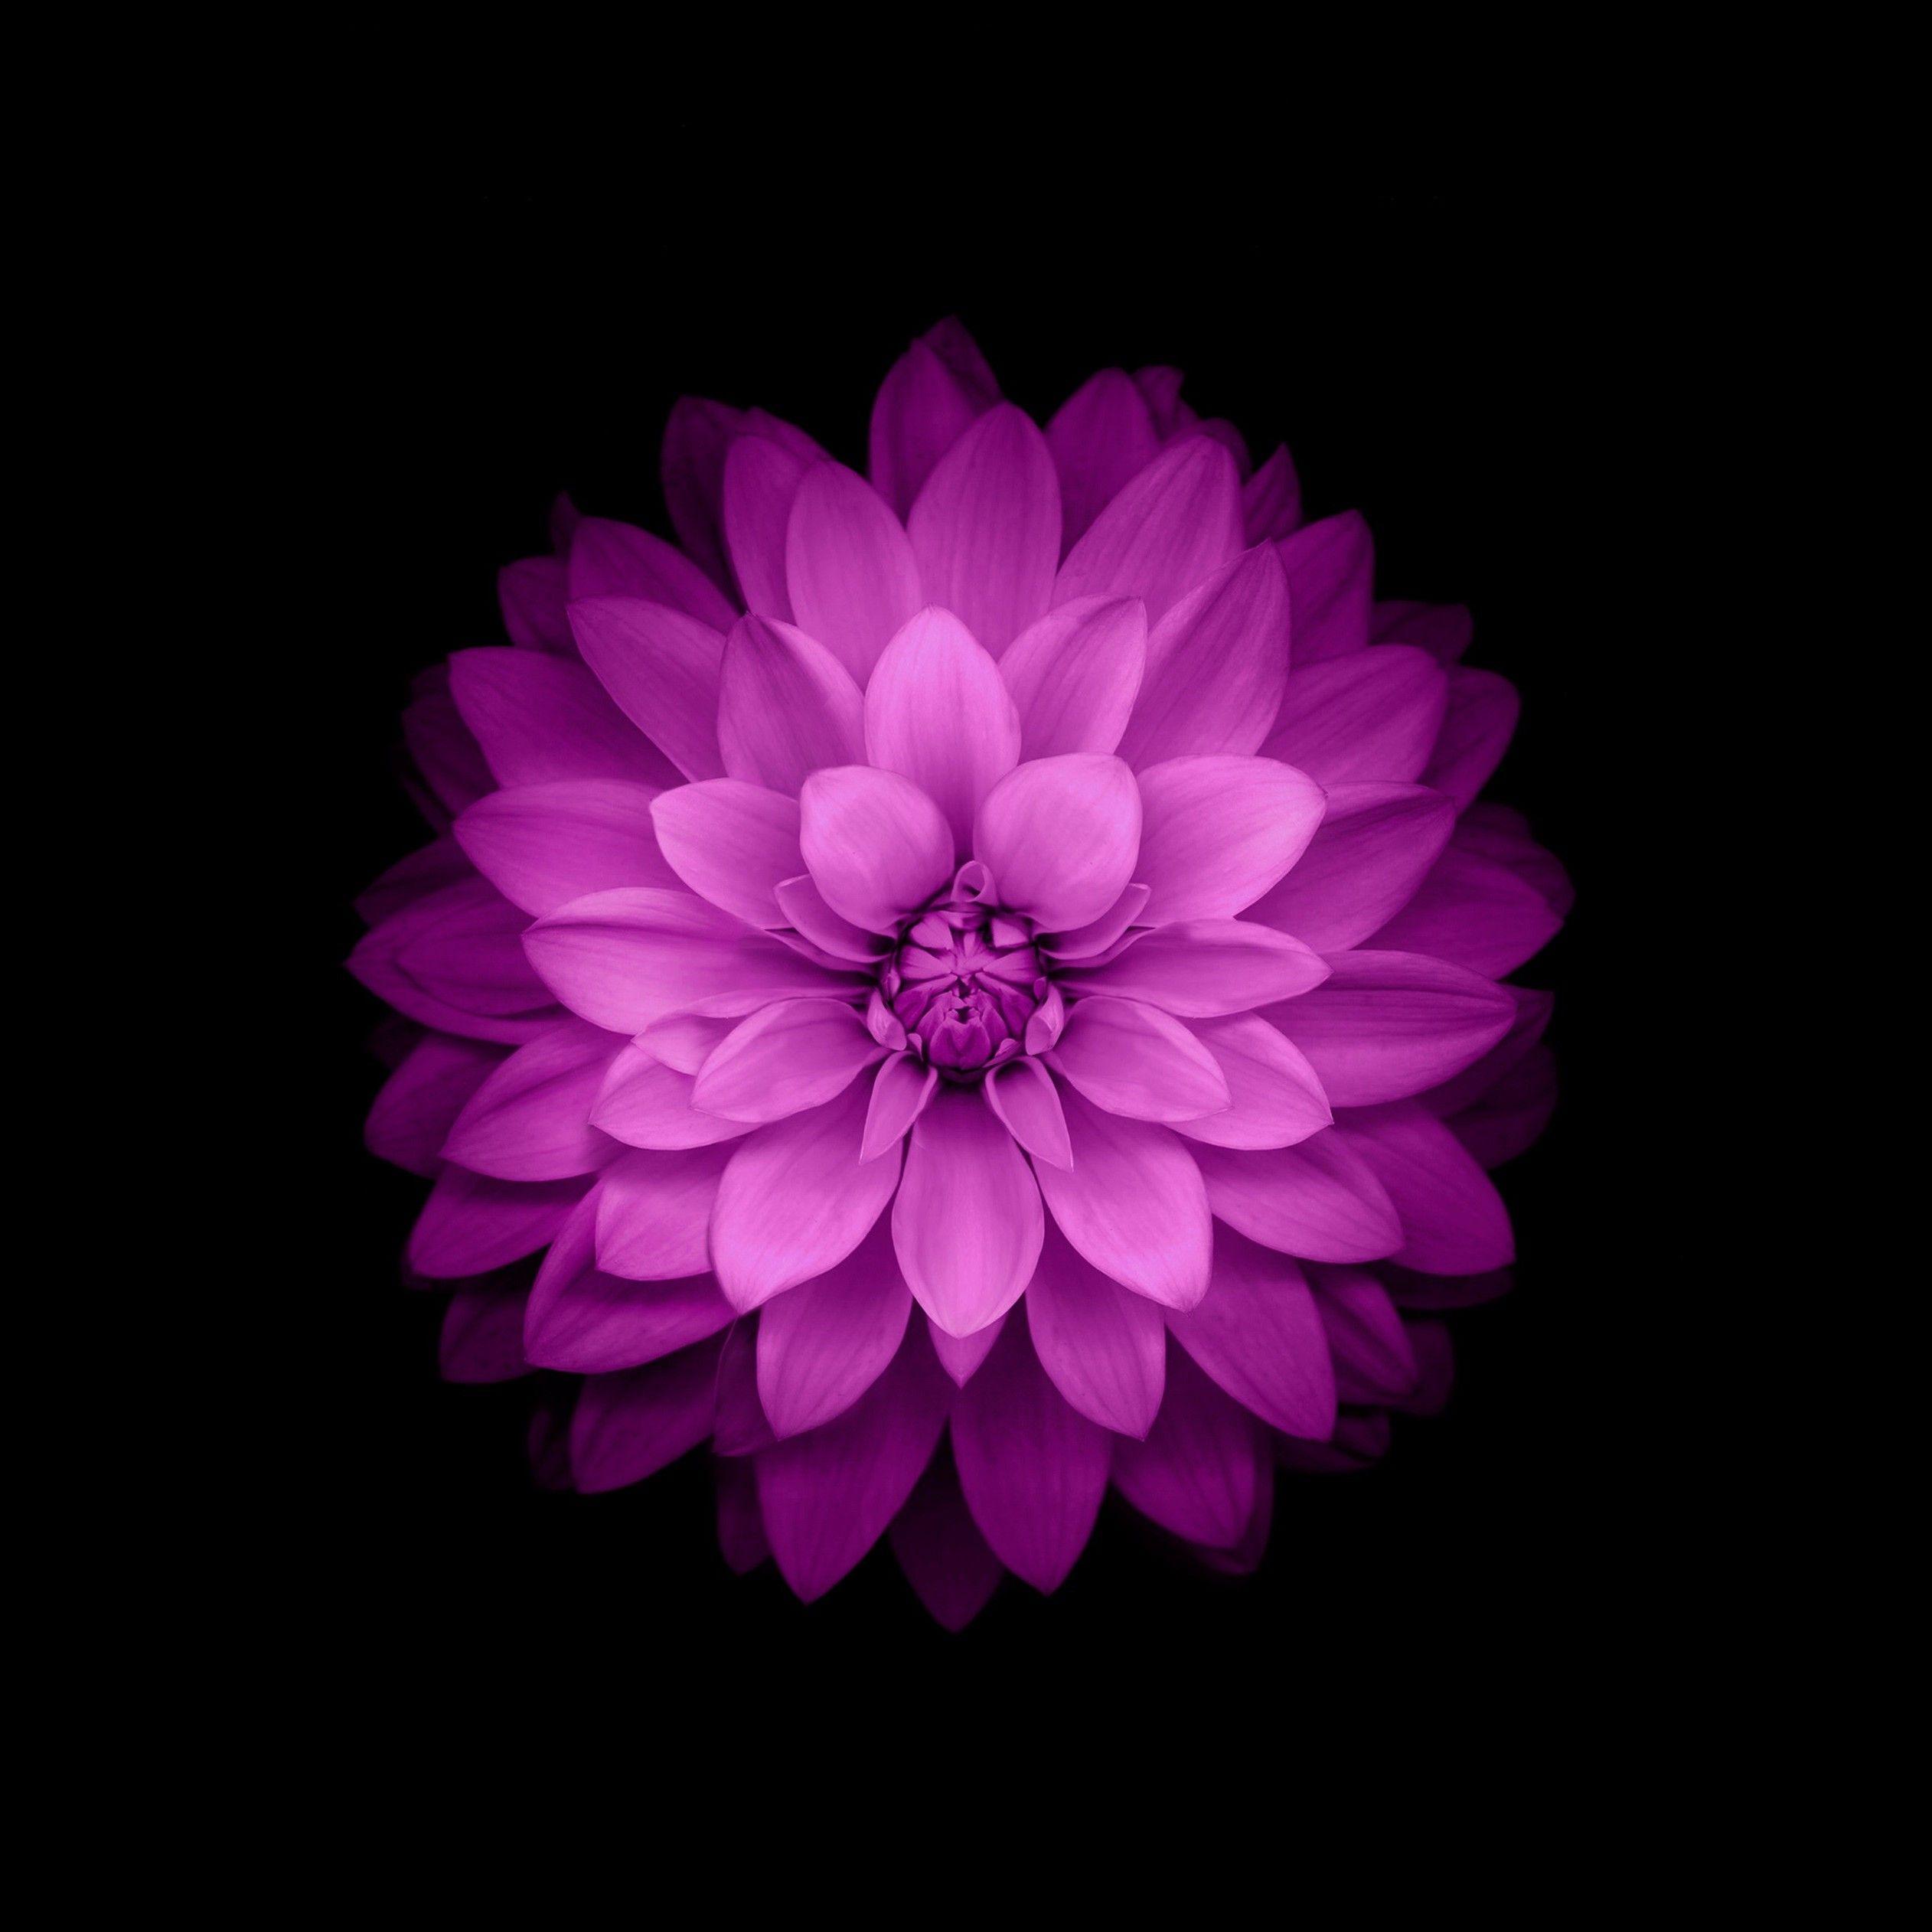 Flowers Ios 8 Purple Wallpaper Hd Desktop And